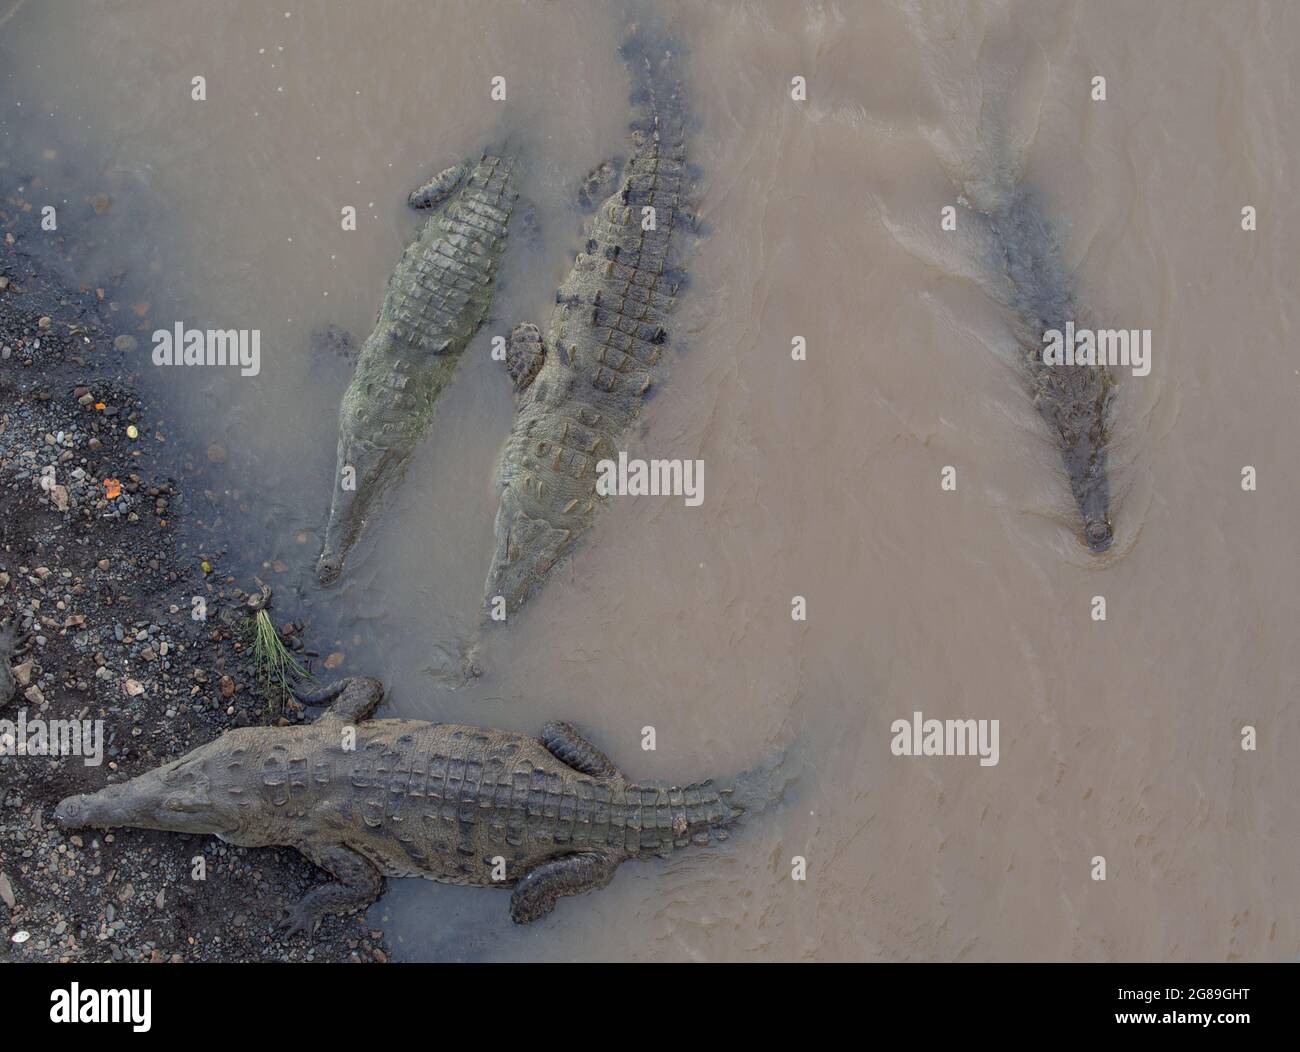 American crocodiles (Crocodylus acutus) in the Tarcoles River Costa Rica. Stock Photo